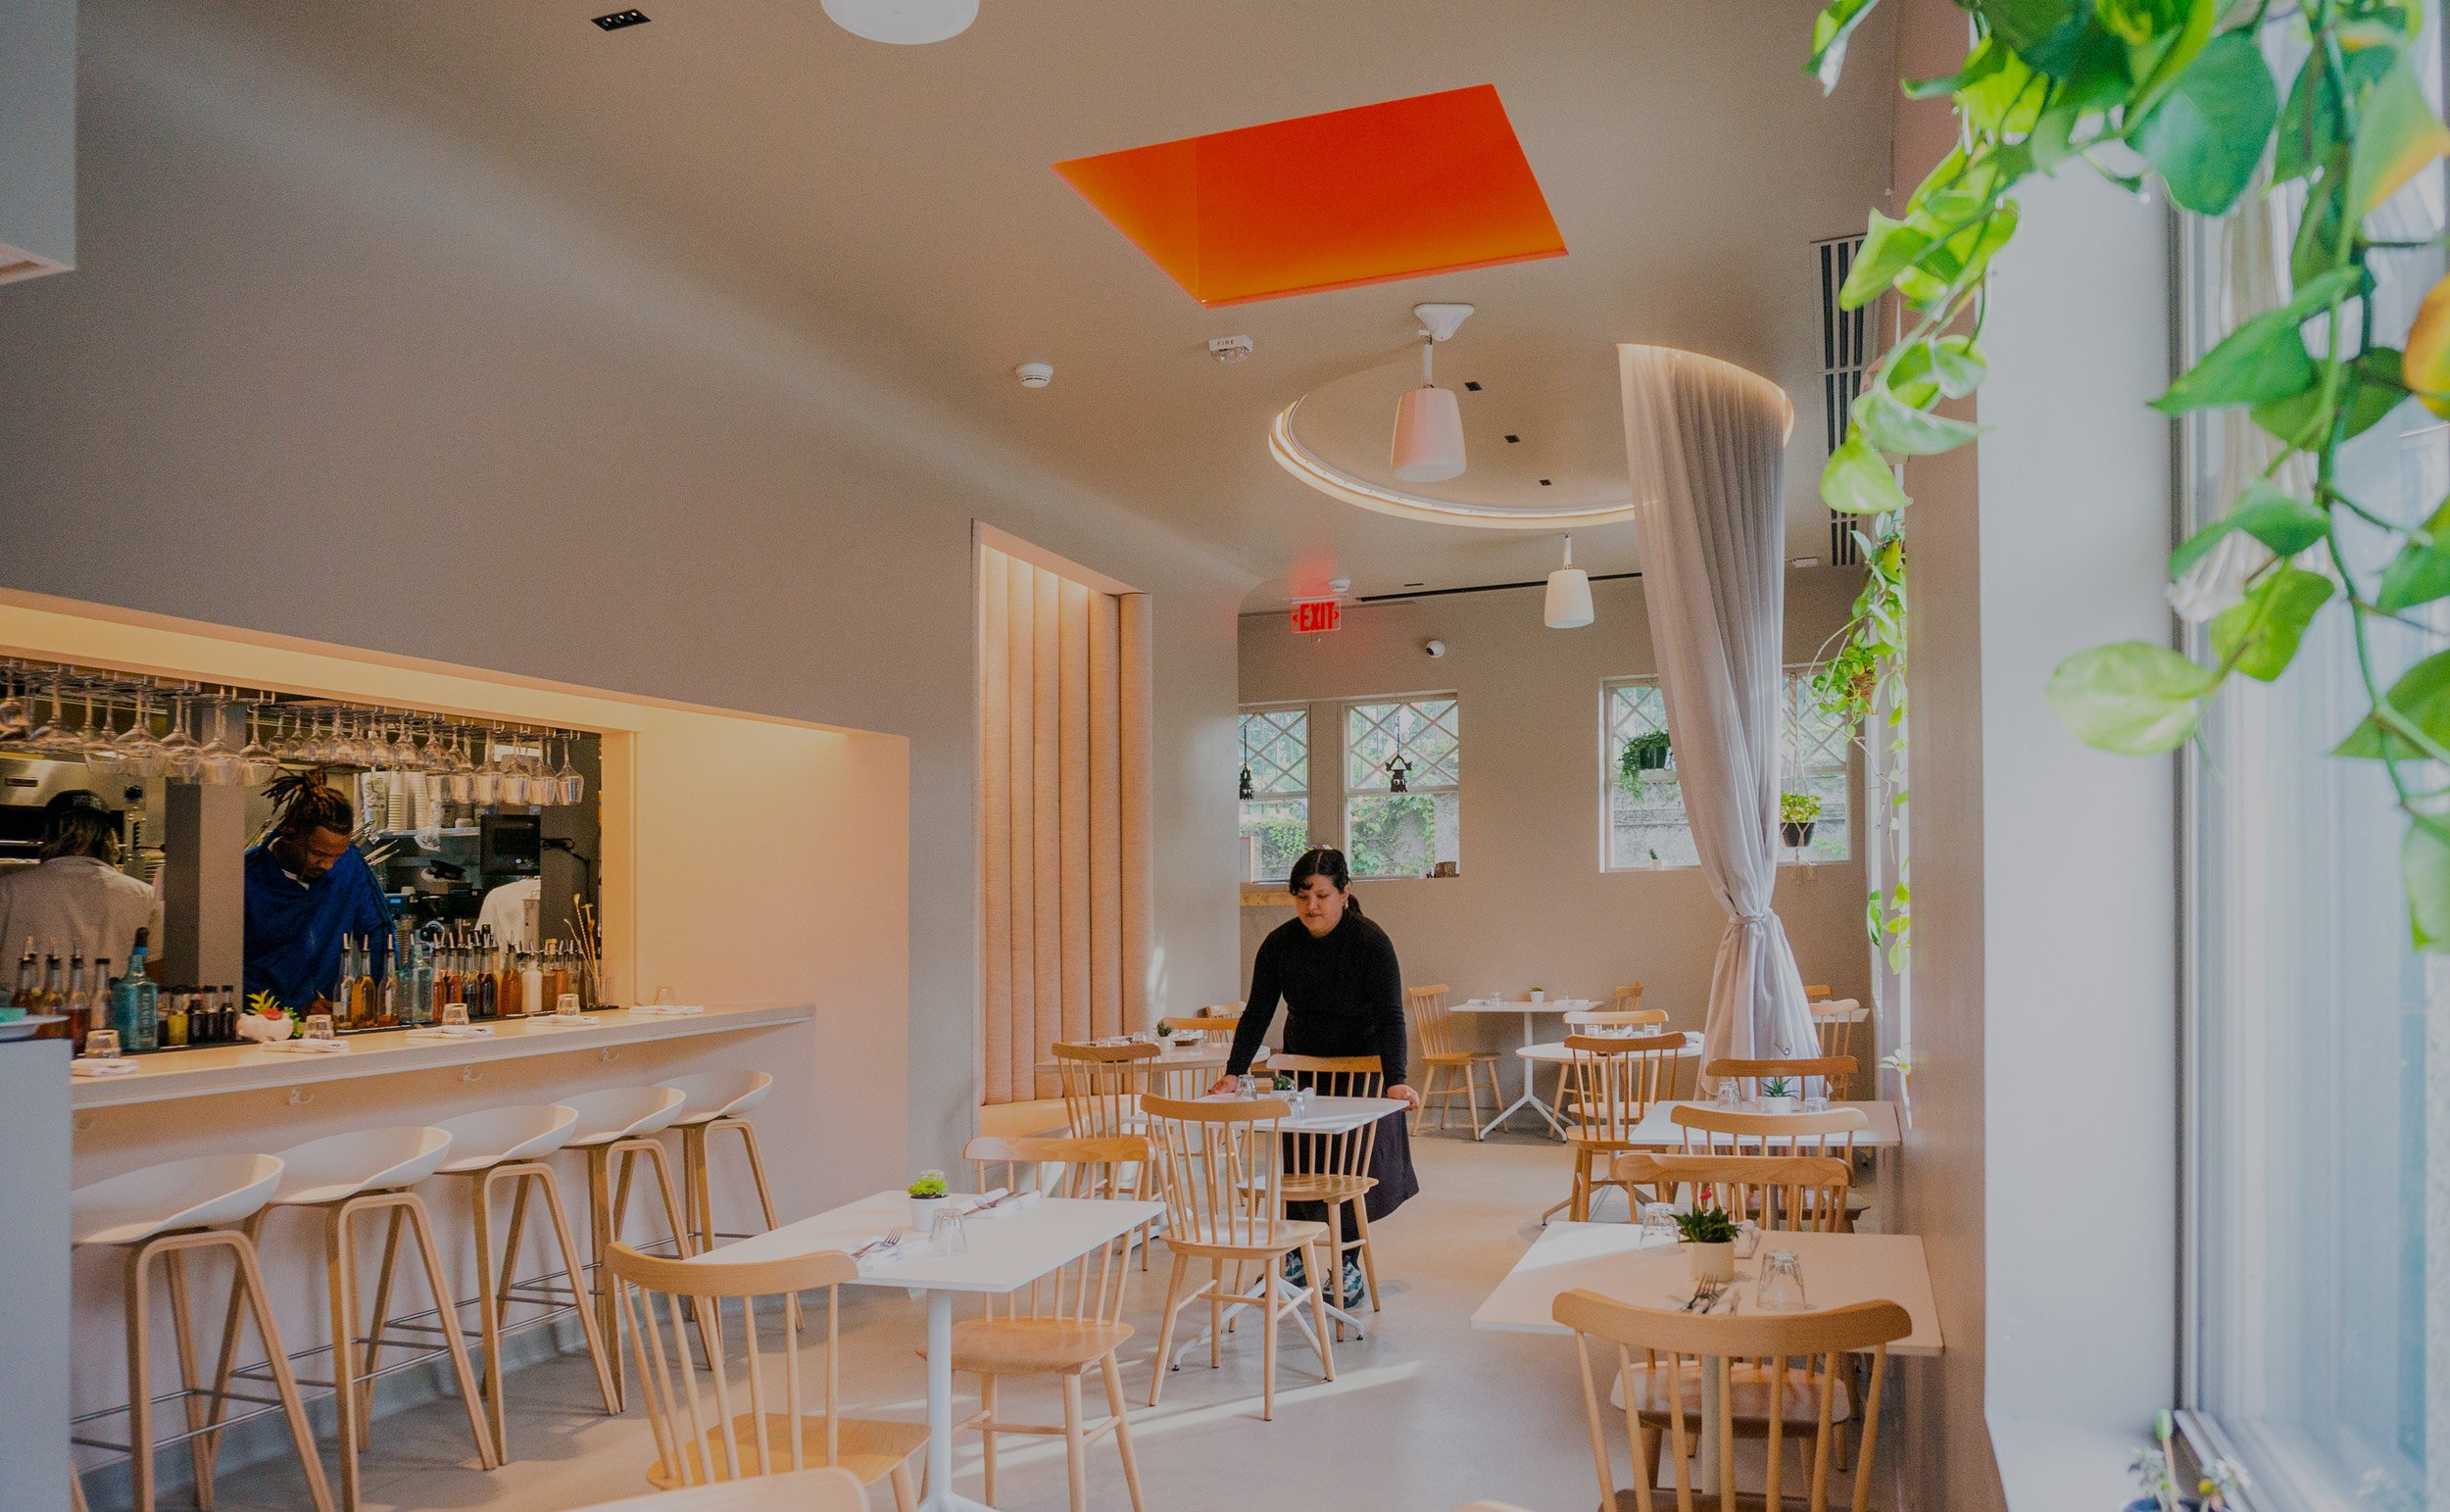 Mini Cafe Interior Designing Service, More Than 150